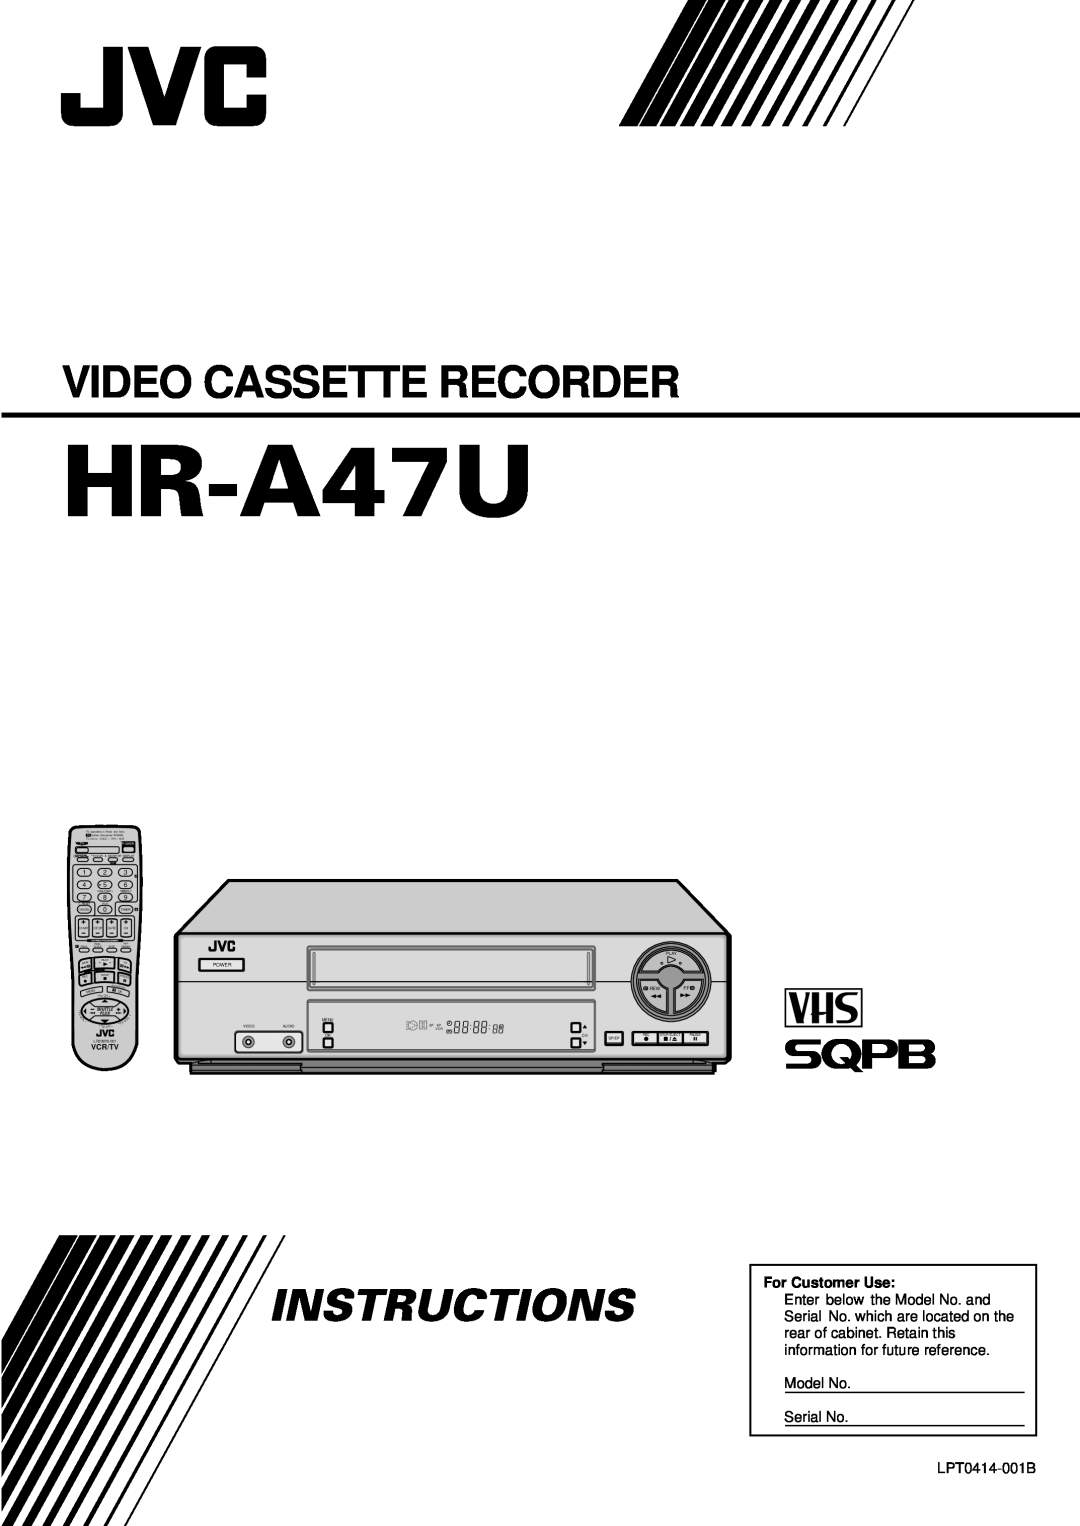 JVC HR-A47U manual Video Cassette Recorder, Instructions, For Customer Use, Model No Serial No, LPT0414-001B, Vcr/Tv 